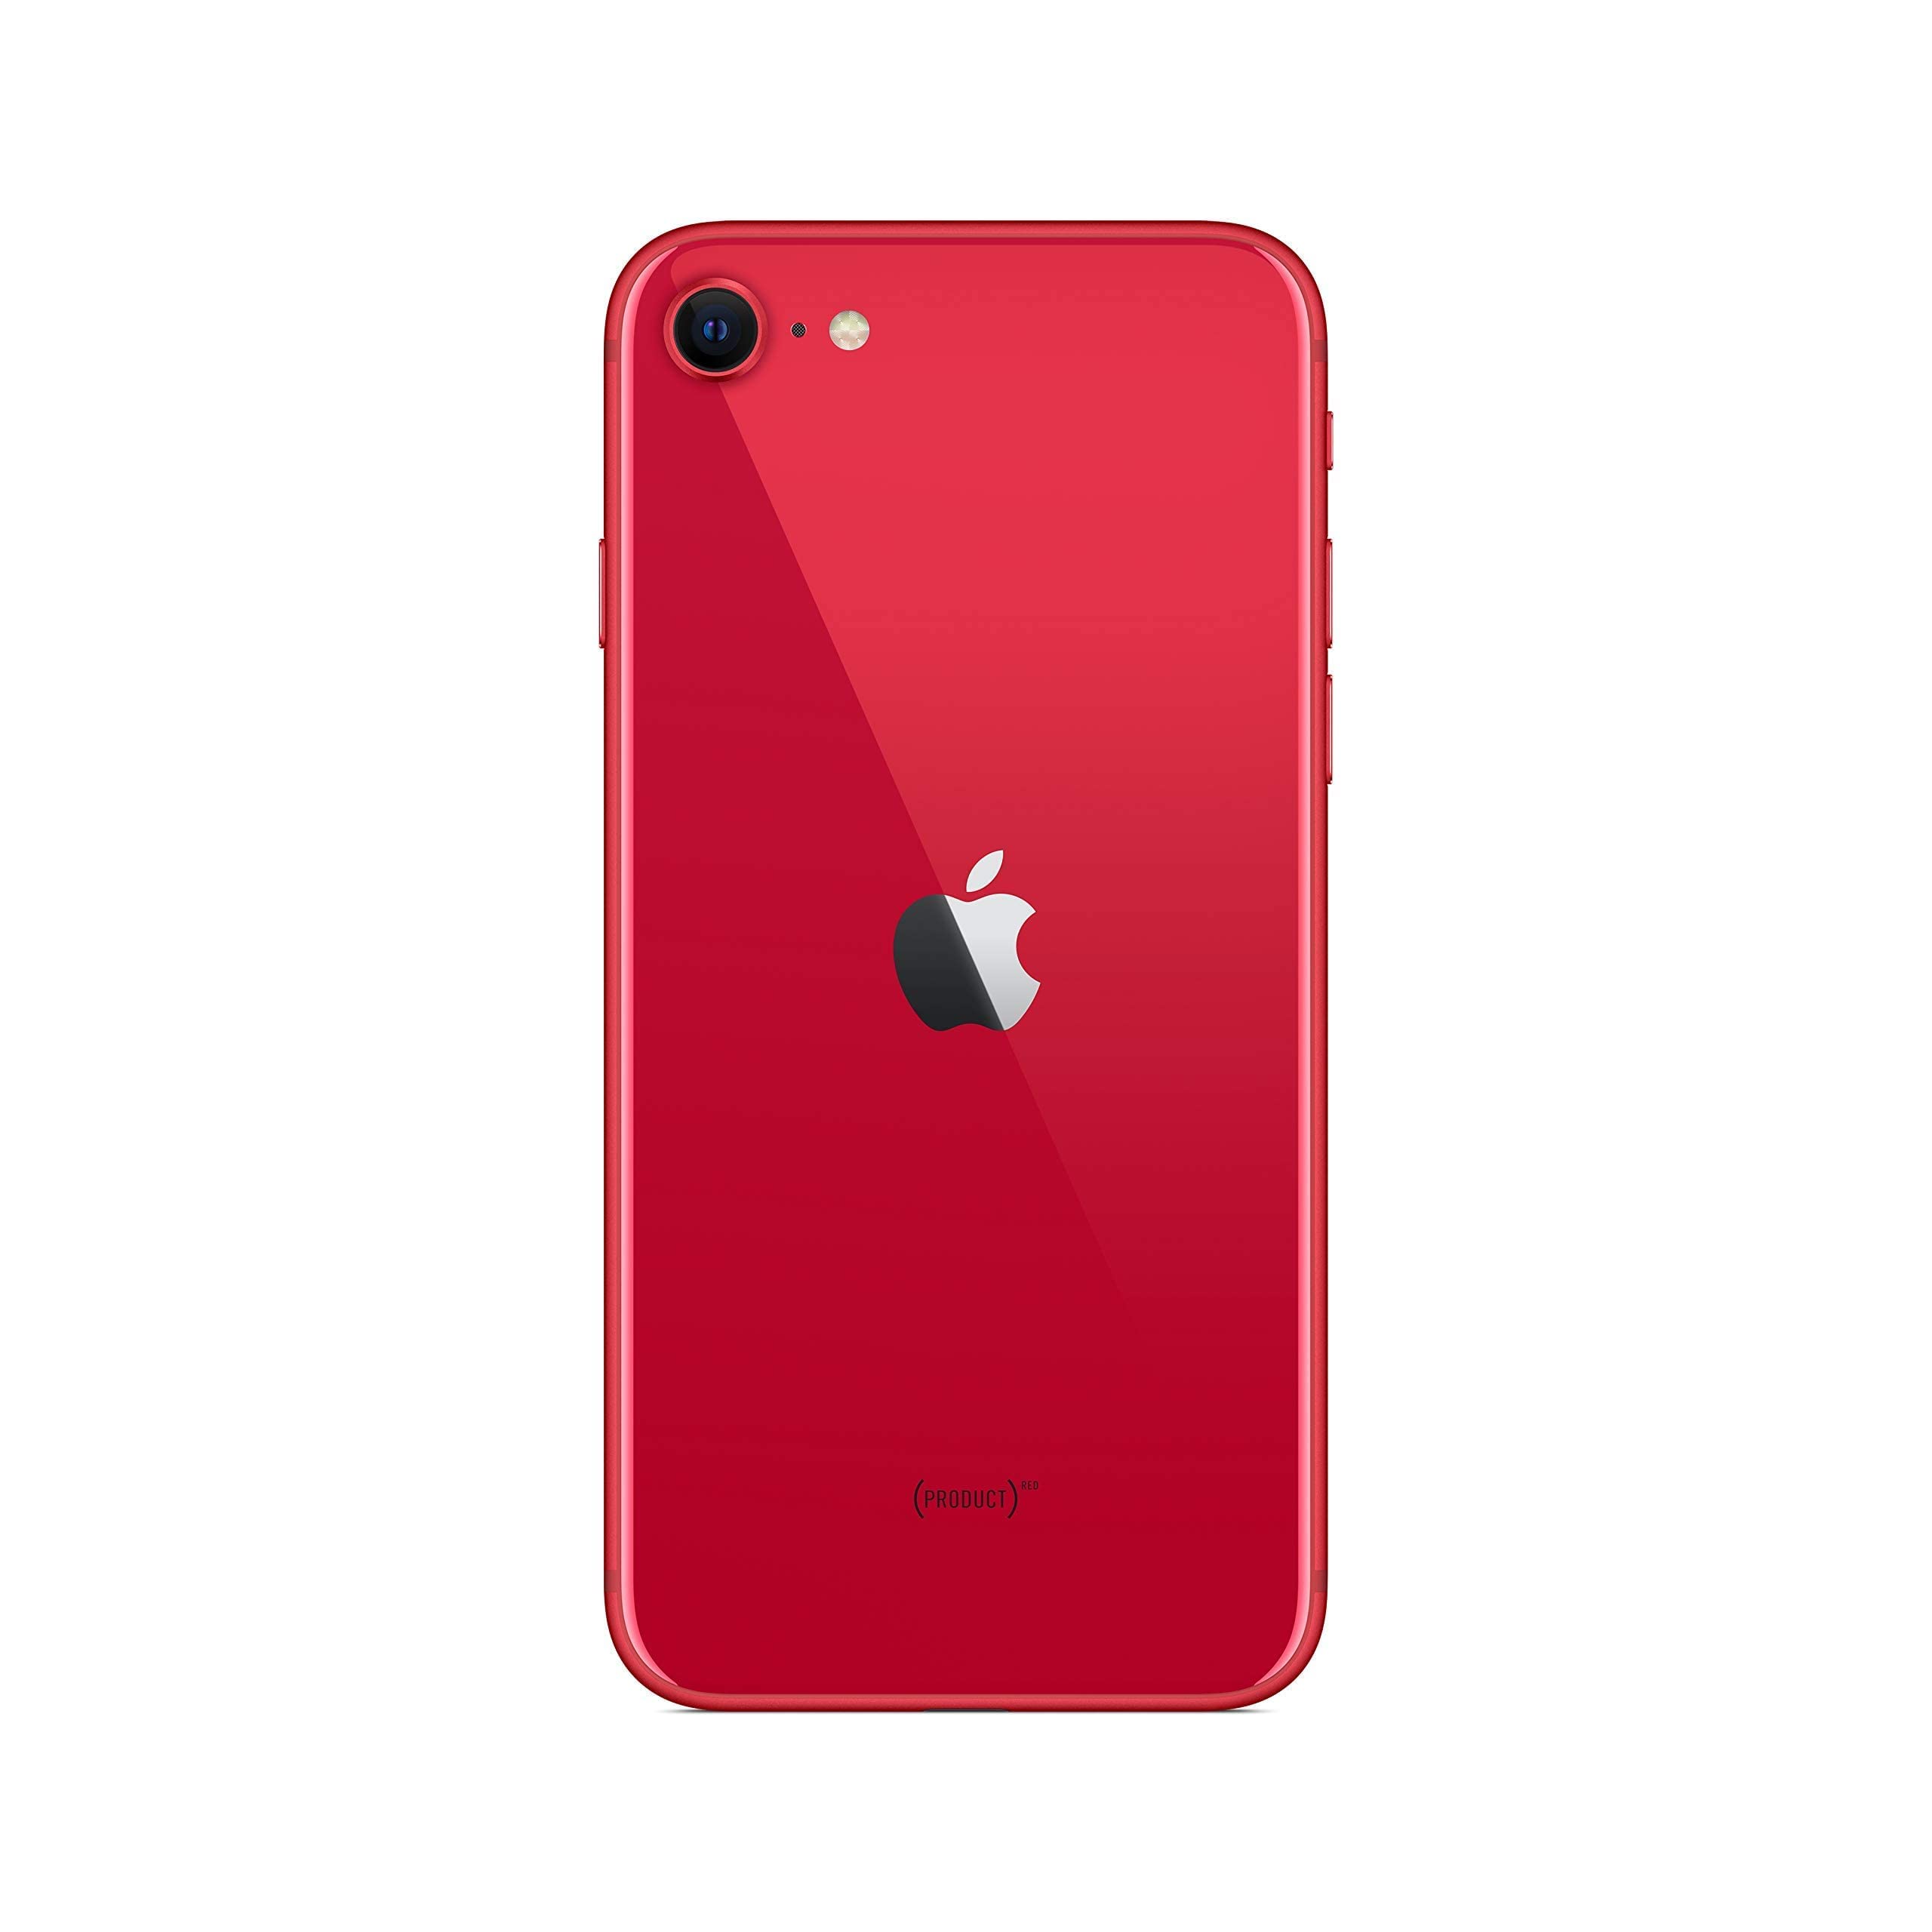 Apple iPhone SE, 64GB, Red - Fully Unlocked (Renewed Premium)